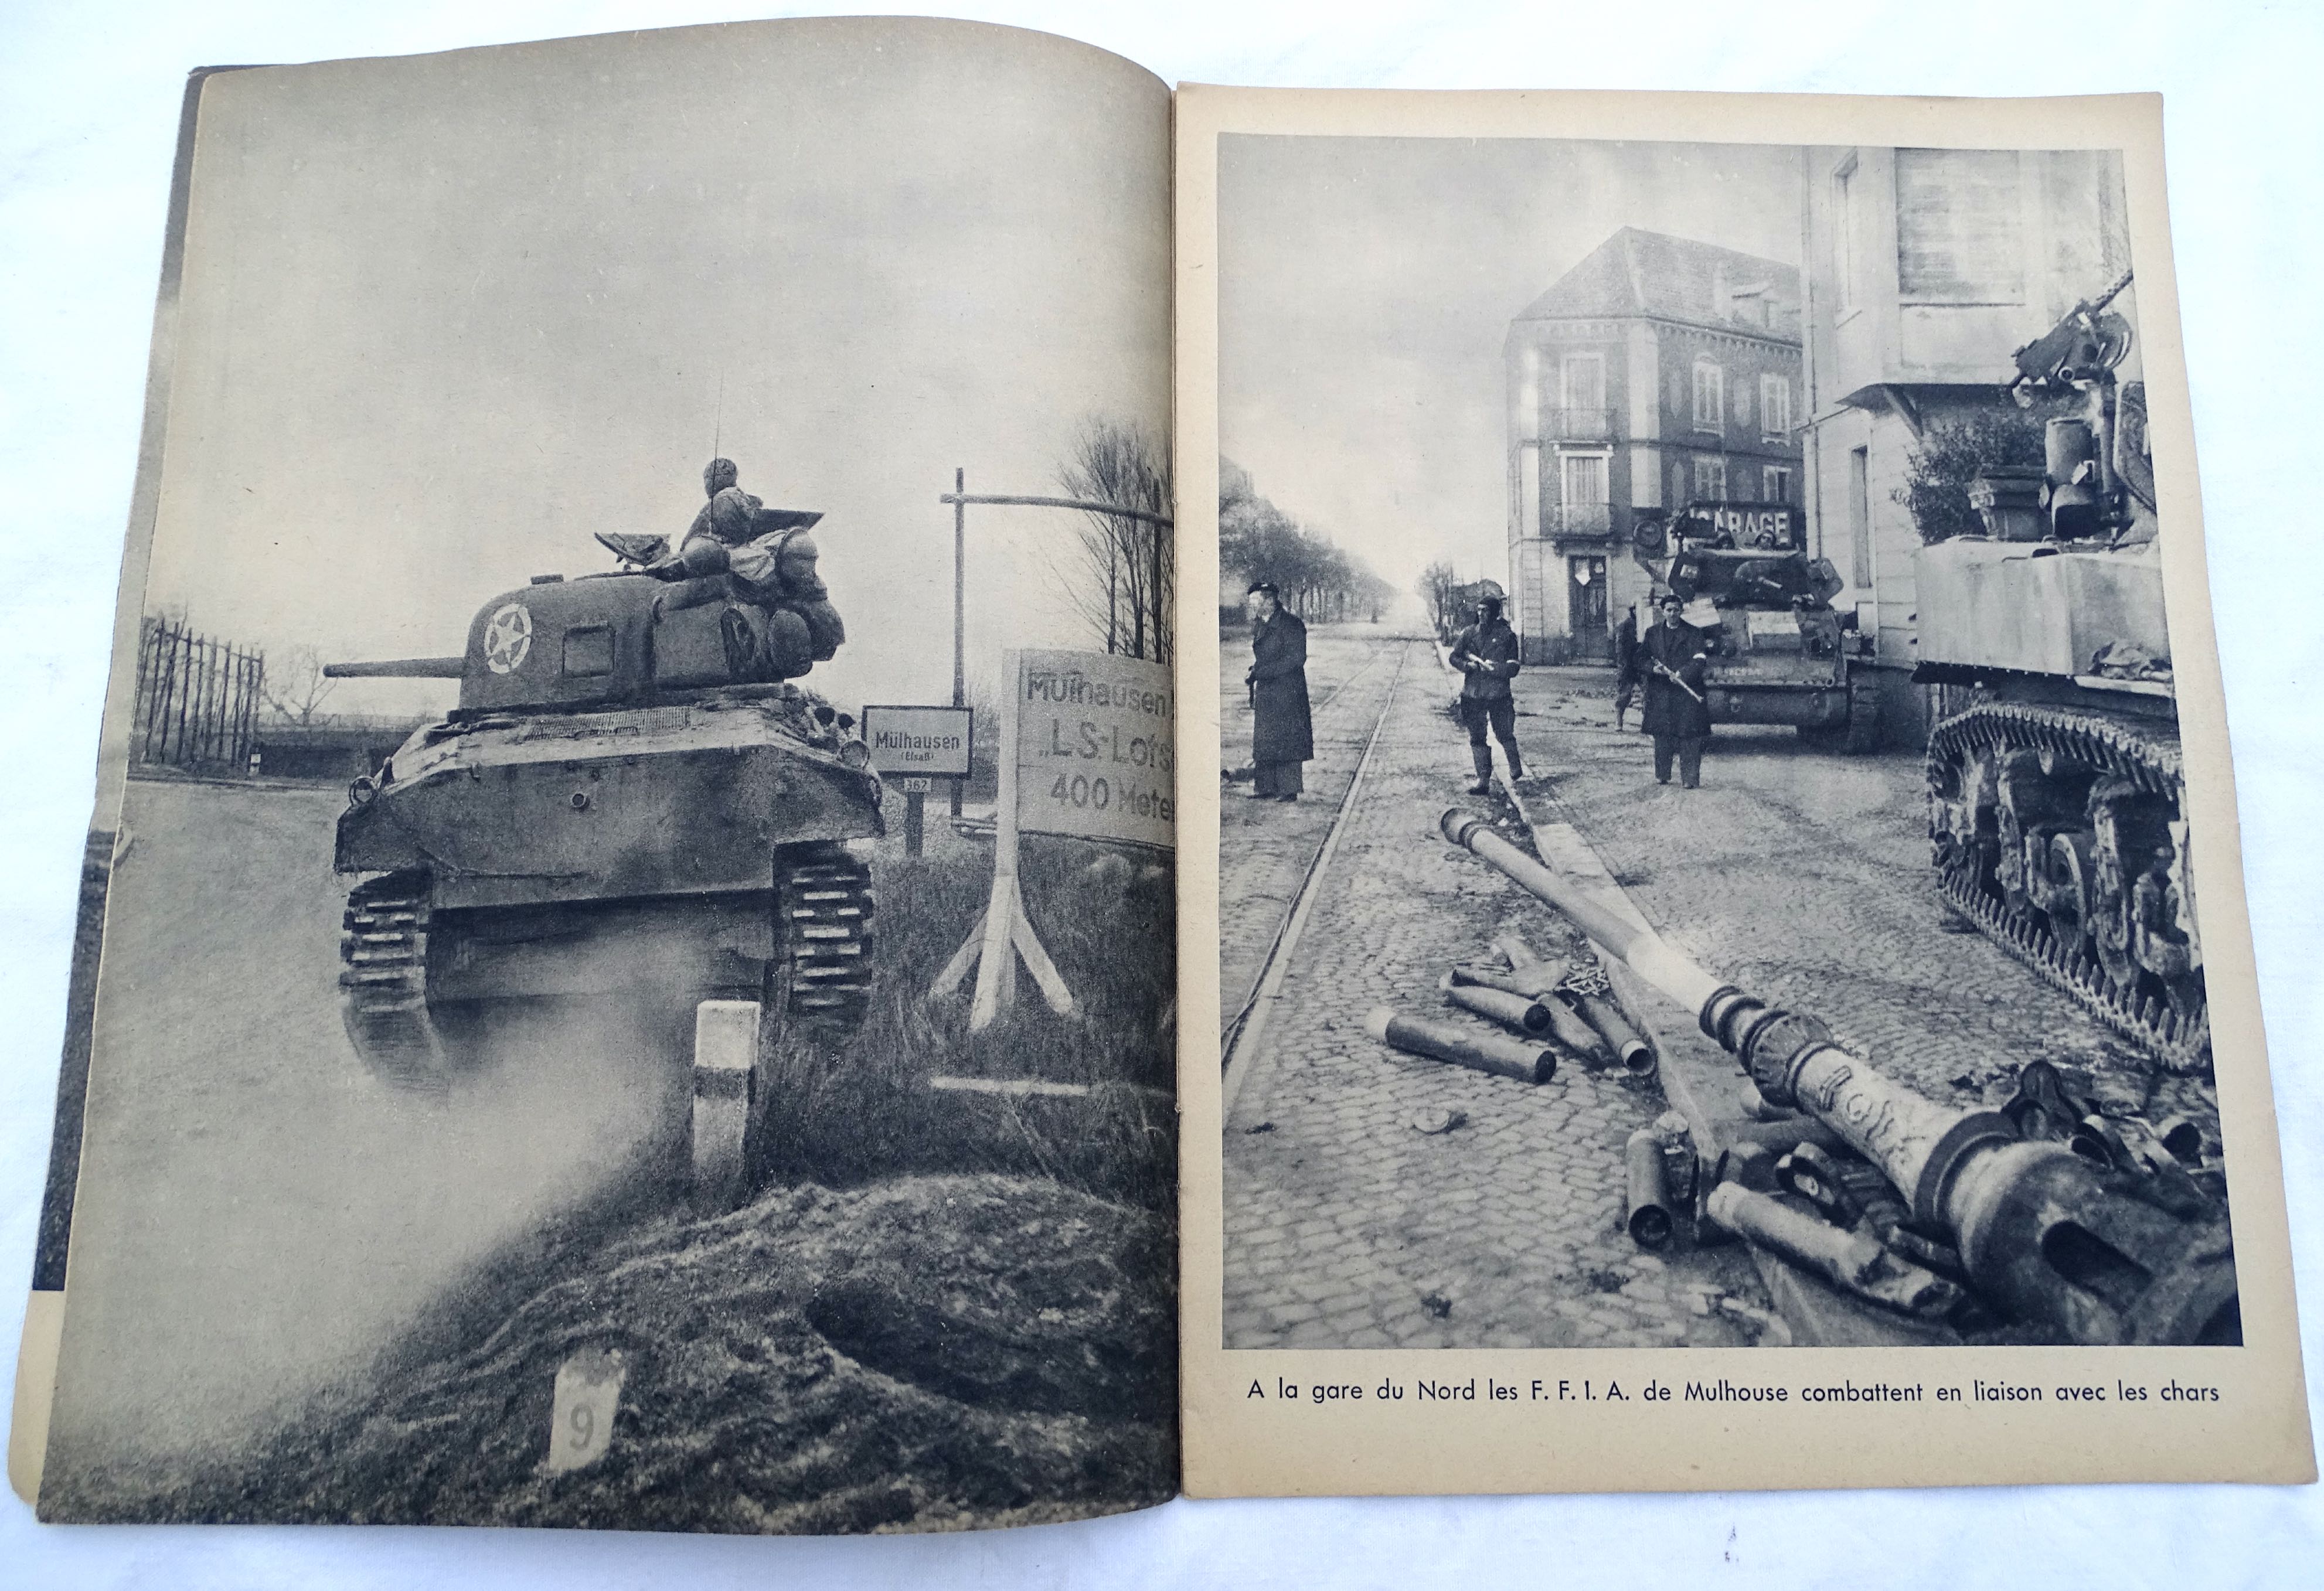 La lib&eacute;ration de Mulhouse Les &eacute;ditions Braun. Mars 1945